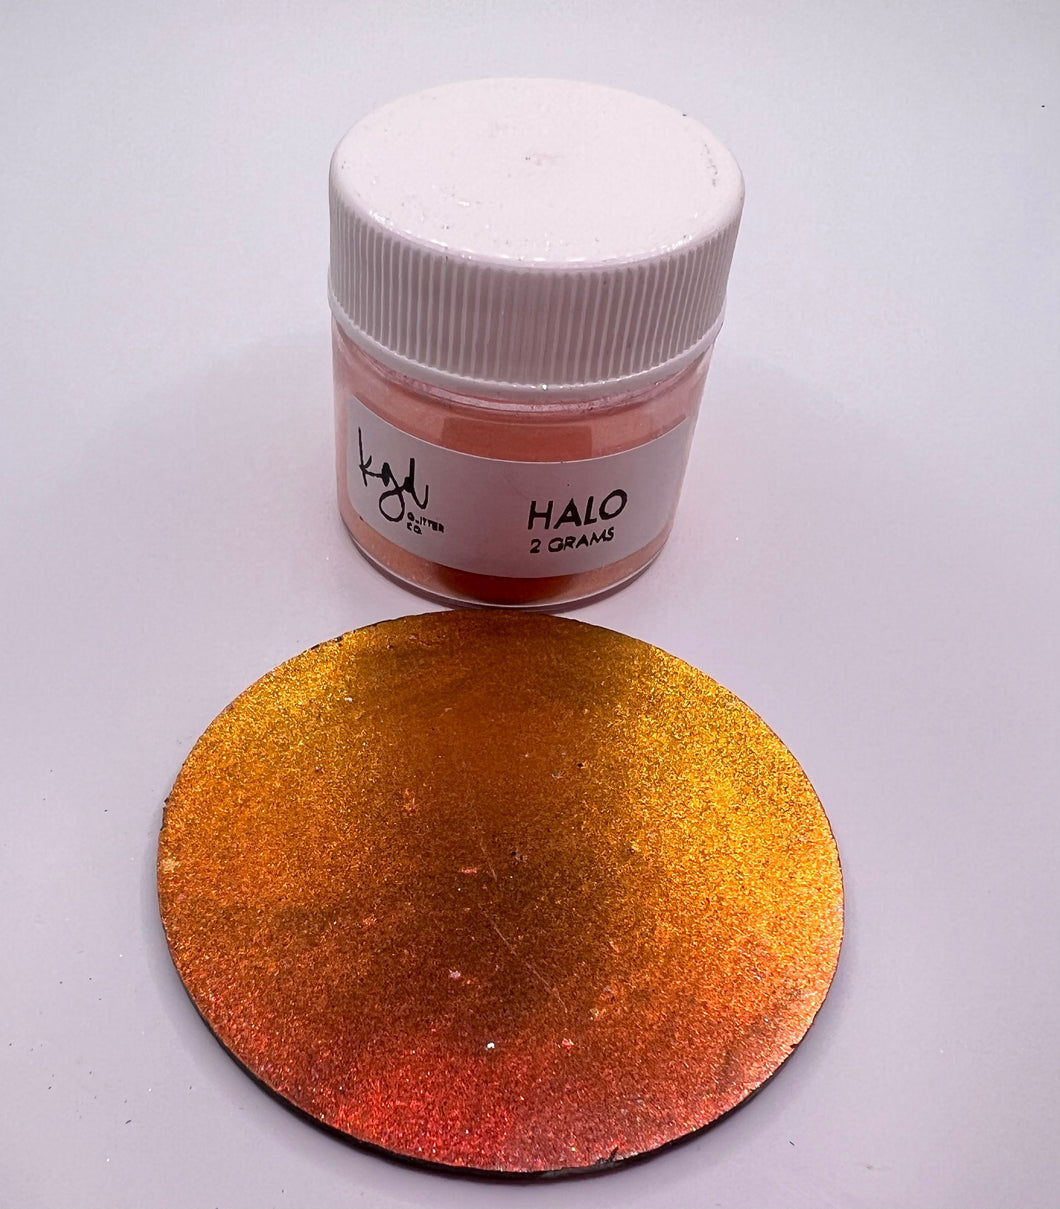 Halo 2.0 // Multichrome Chameleon Pigment